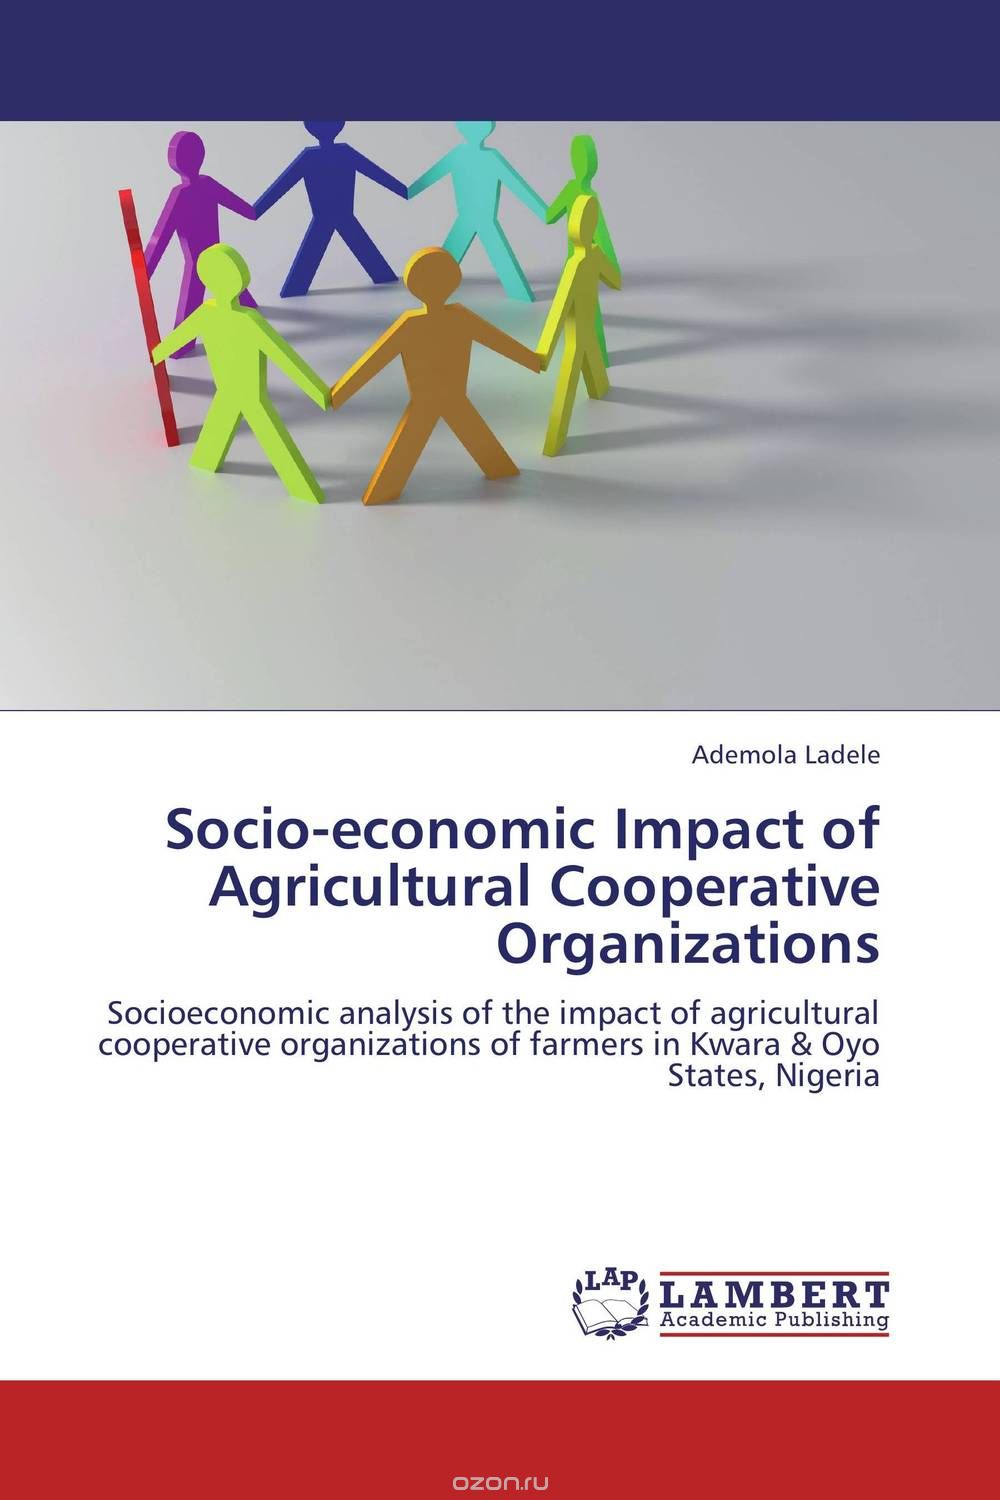 Скачать книгу "Socio-economic Impact of Agricultural Cooperative Organizations"